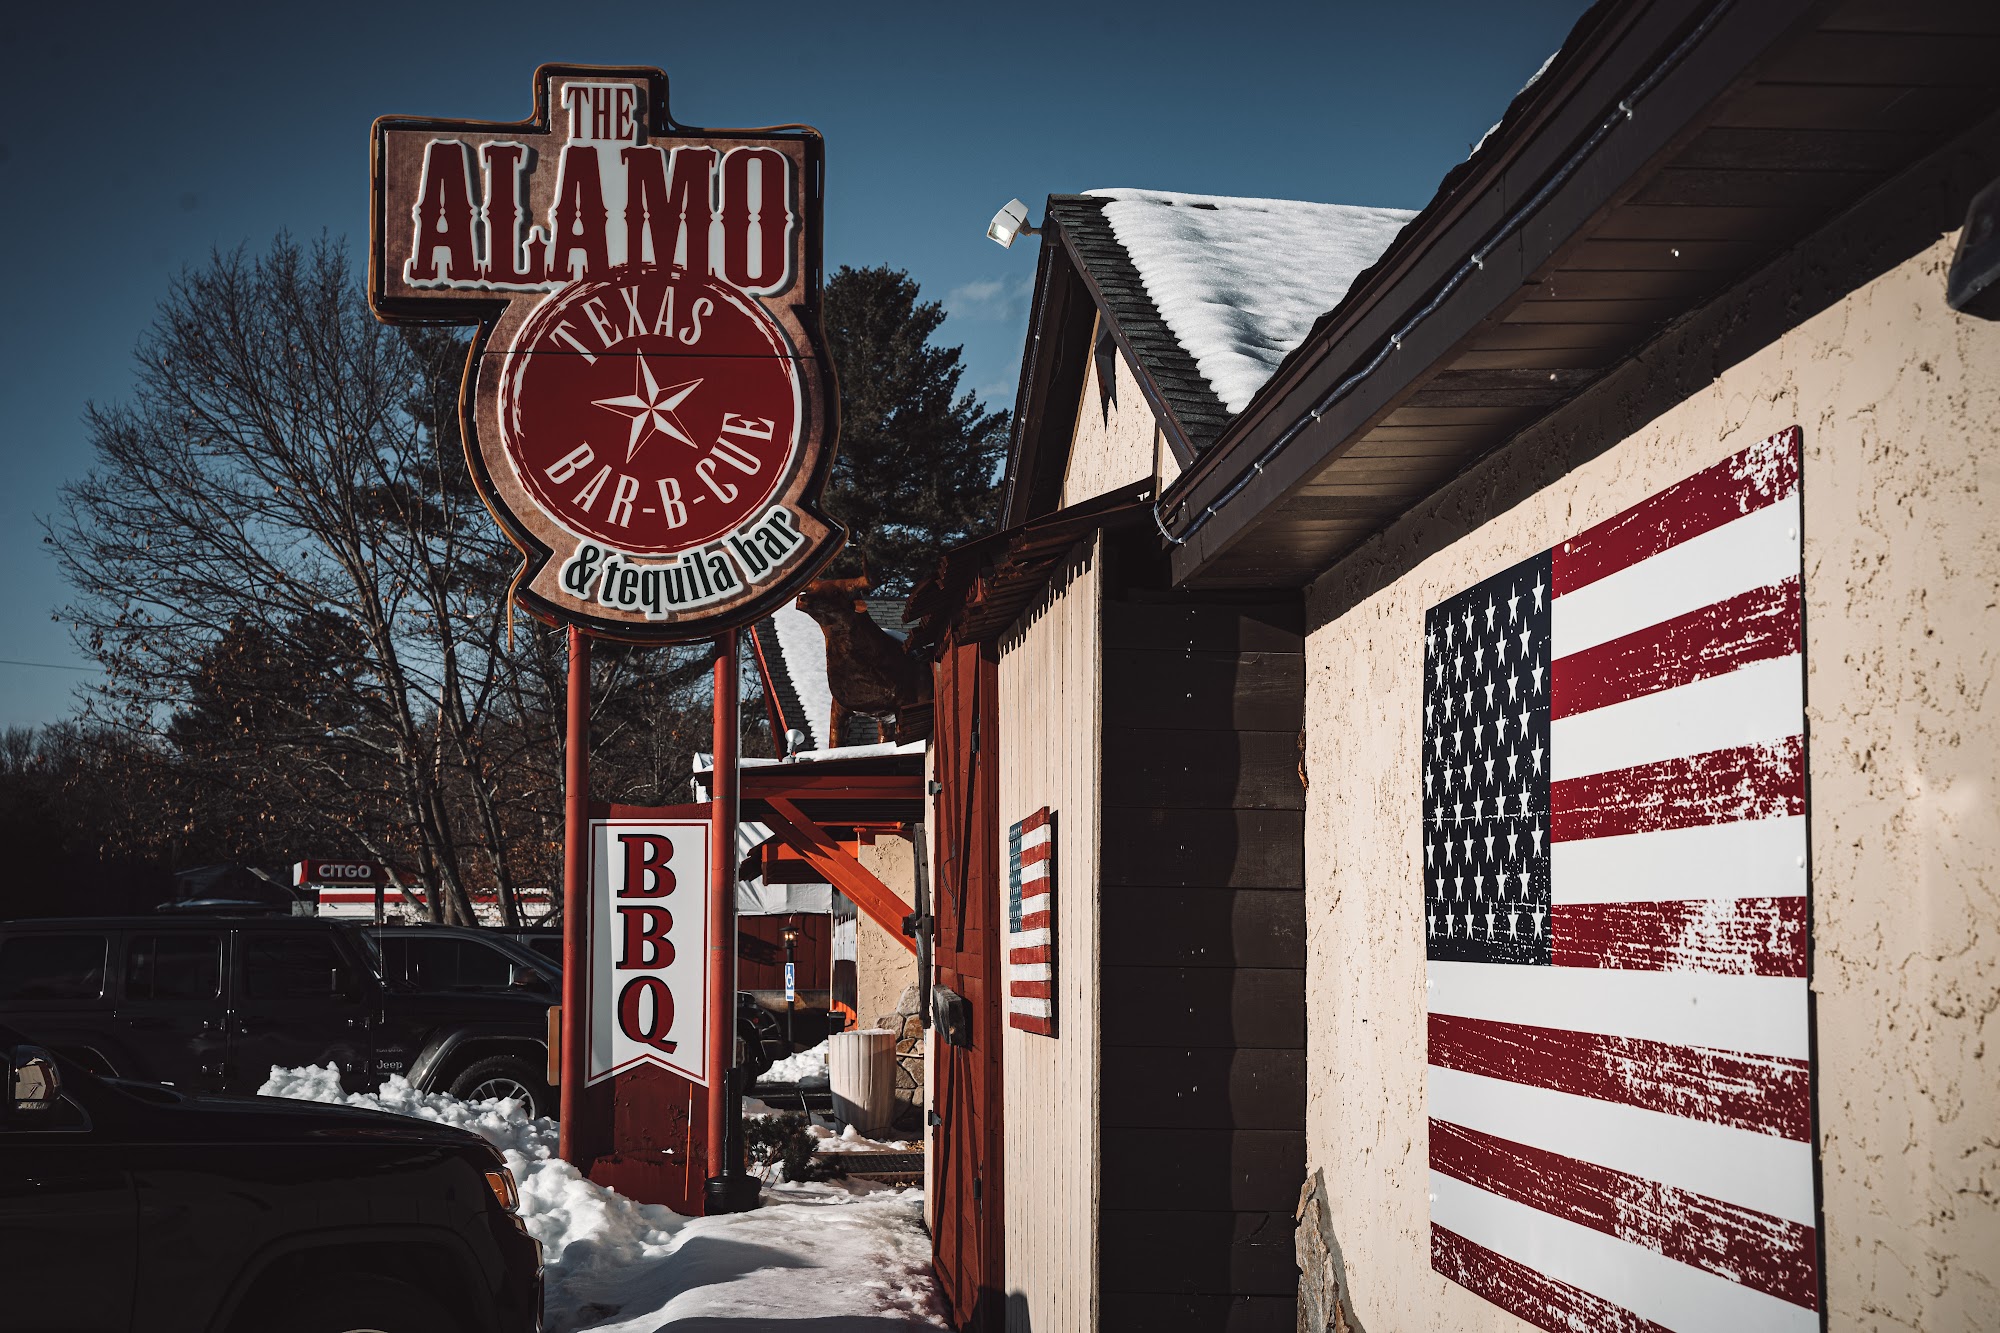 Alamo Texas BBQ and Tequila Bar